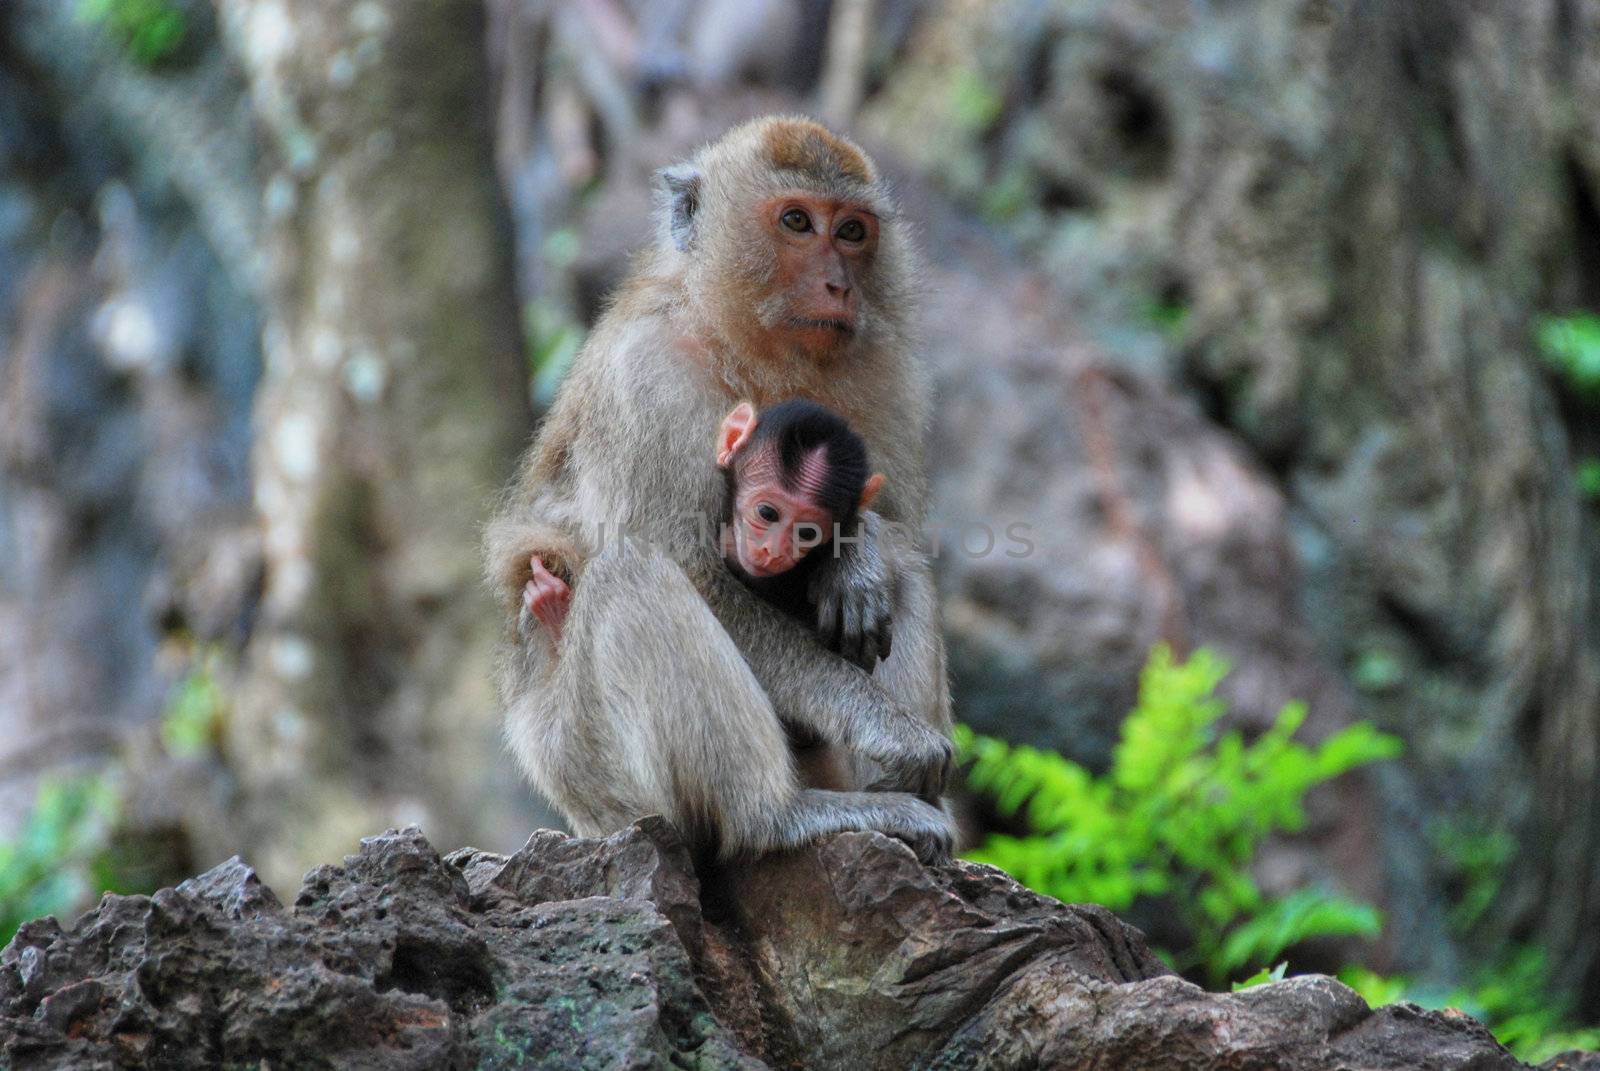 Monkeys in a very expressive position near Changmai